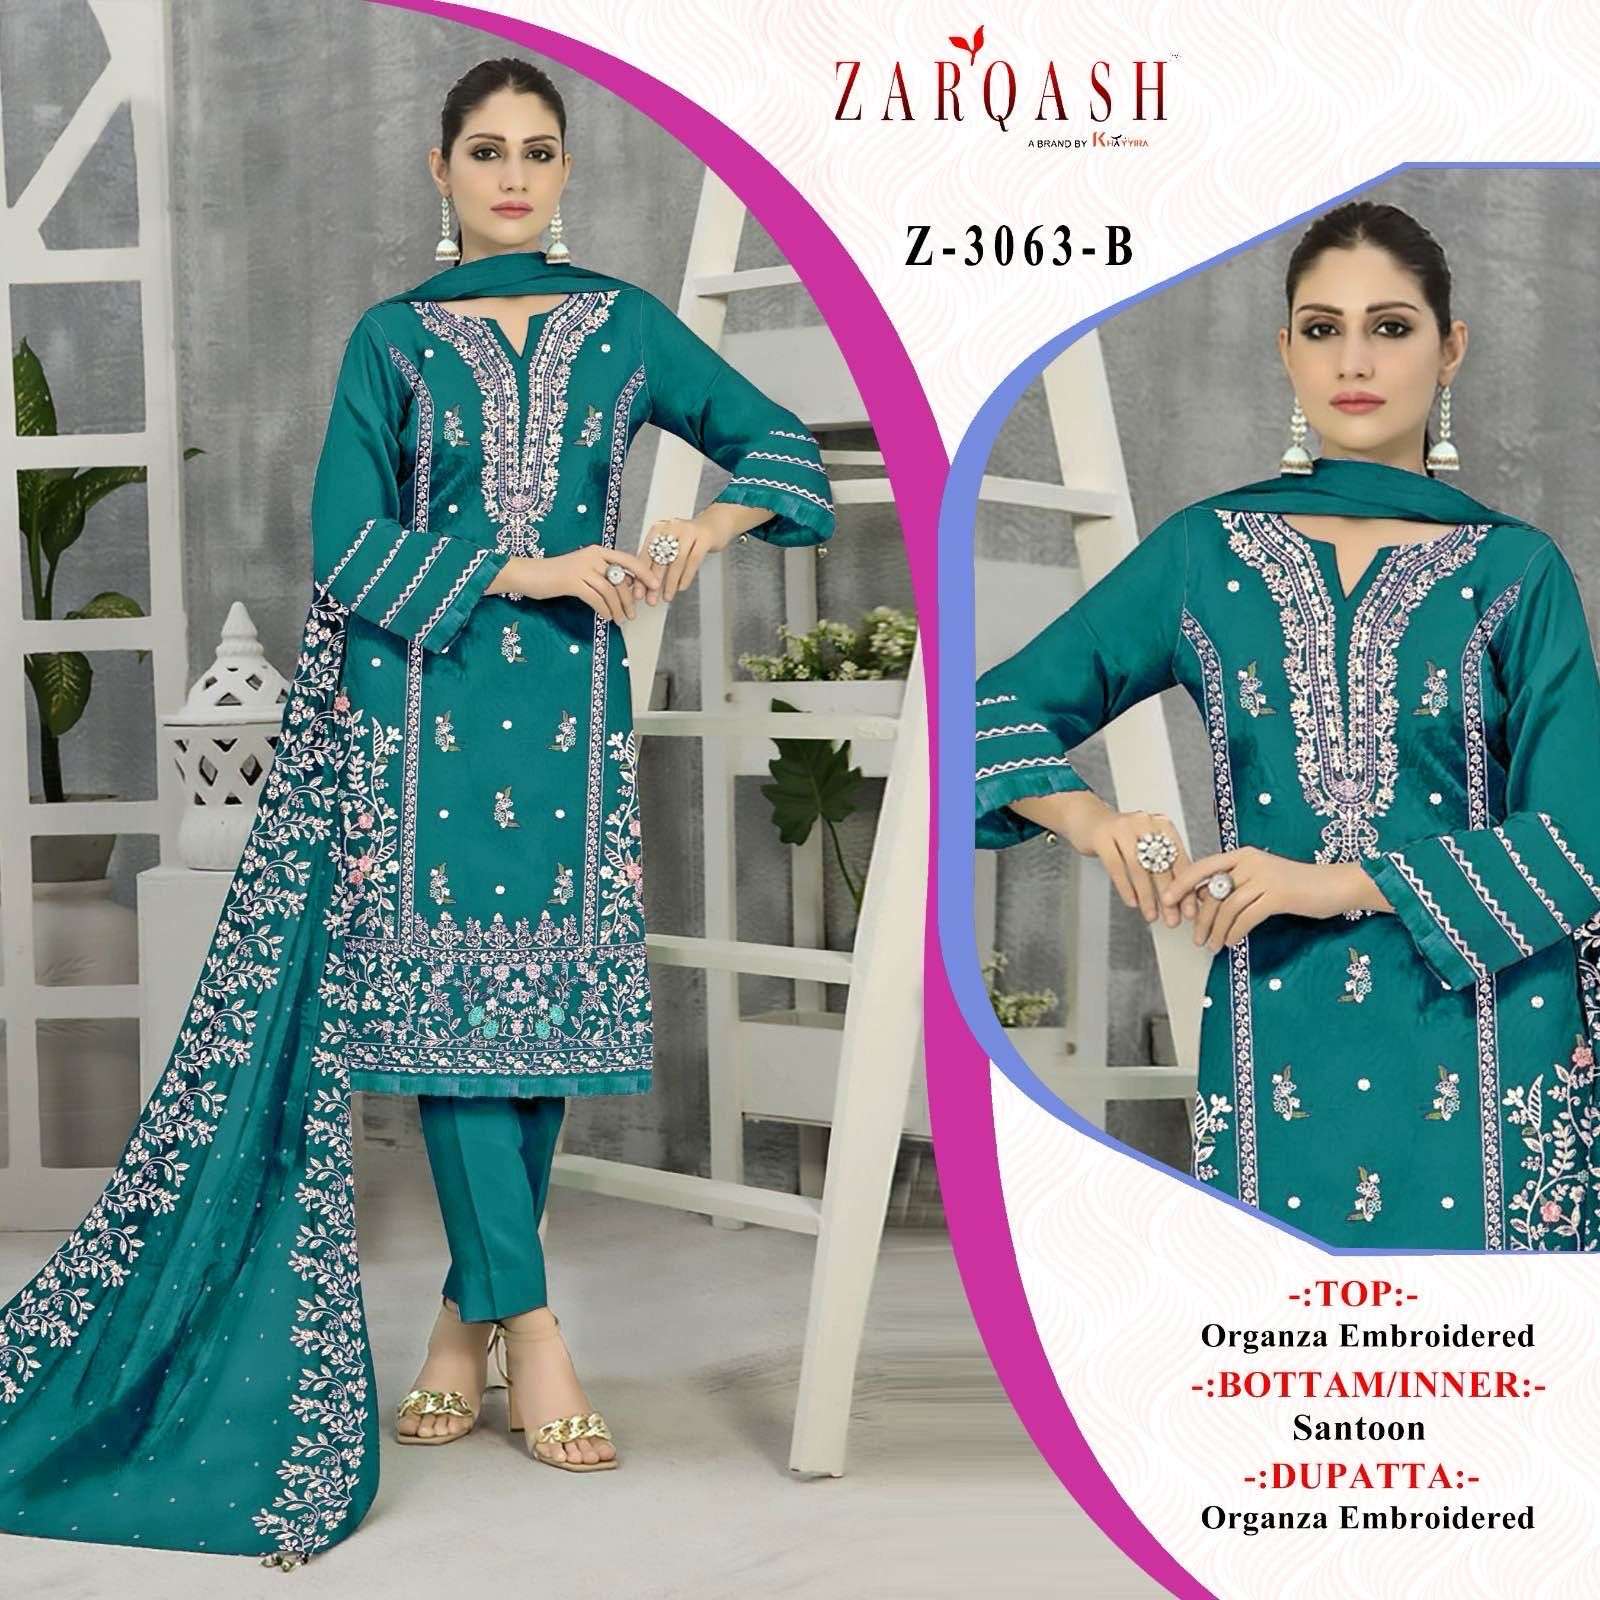 Zarqash Z 3063 A To D Organza Pakistani Suits Wholesale catalog